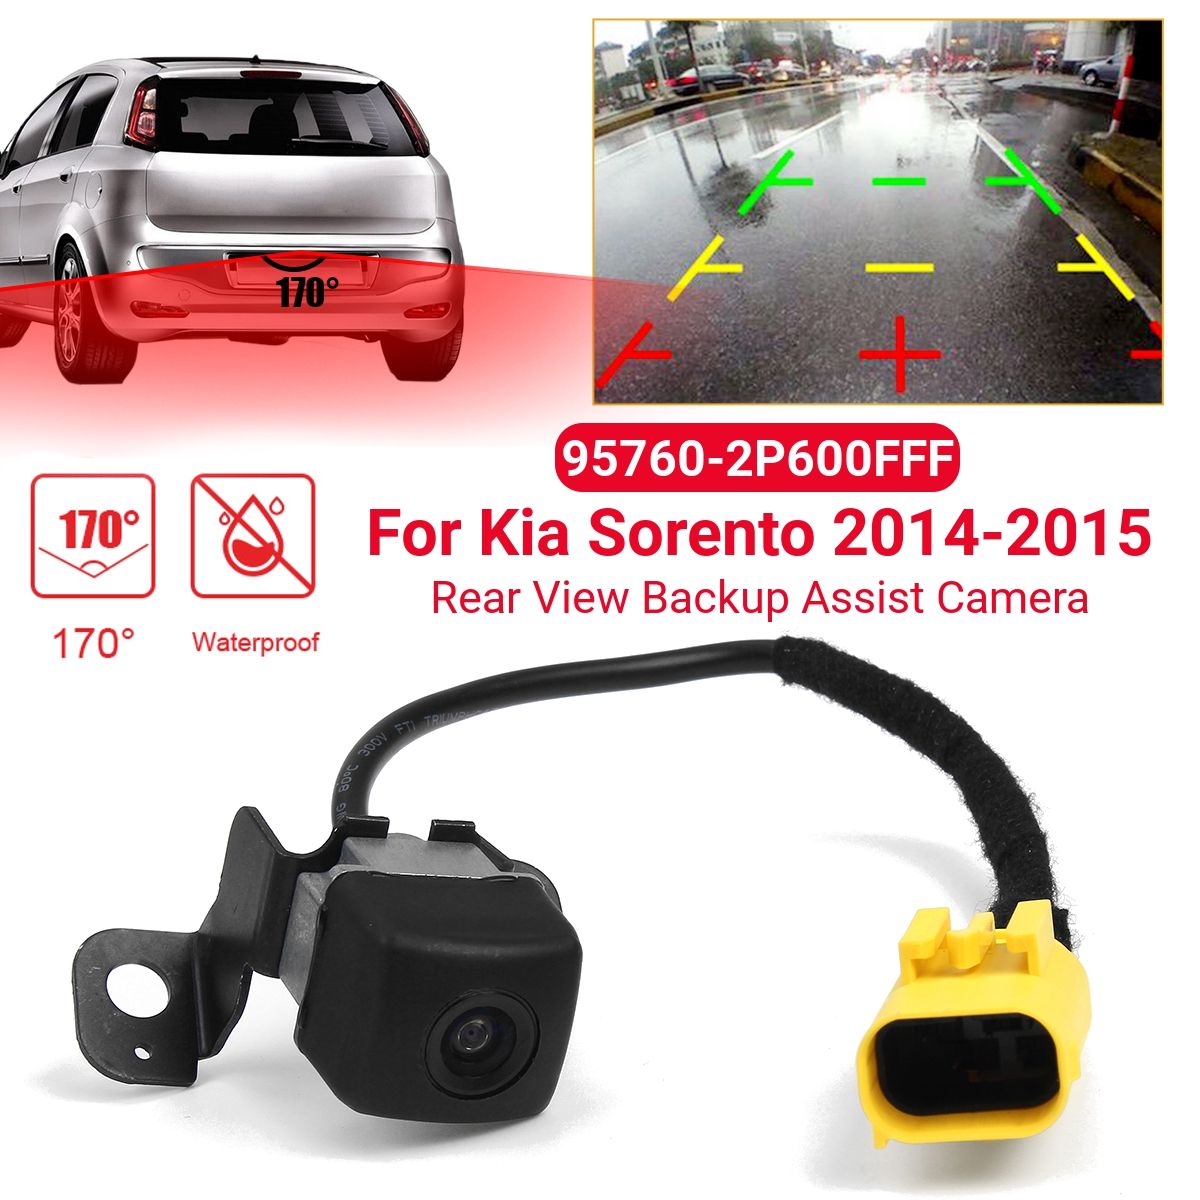 12V-Rear-View-Back-Up-Assist-Camera-For-Kia-Sorento-2014-2015-95760-2P600FFF-1769585